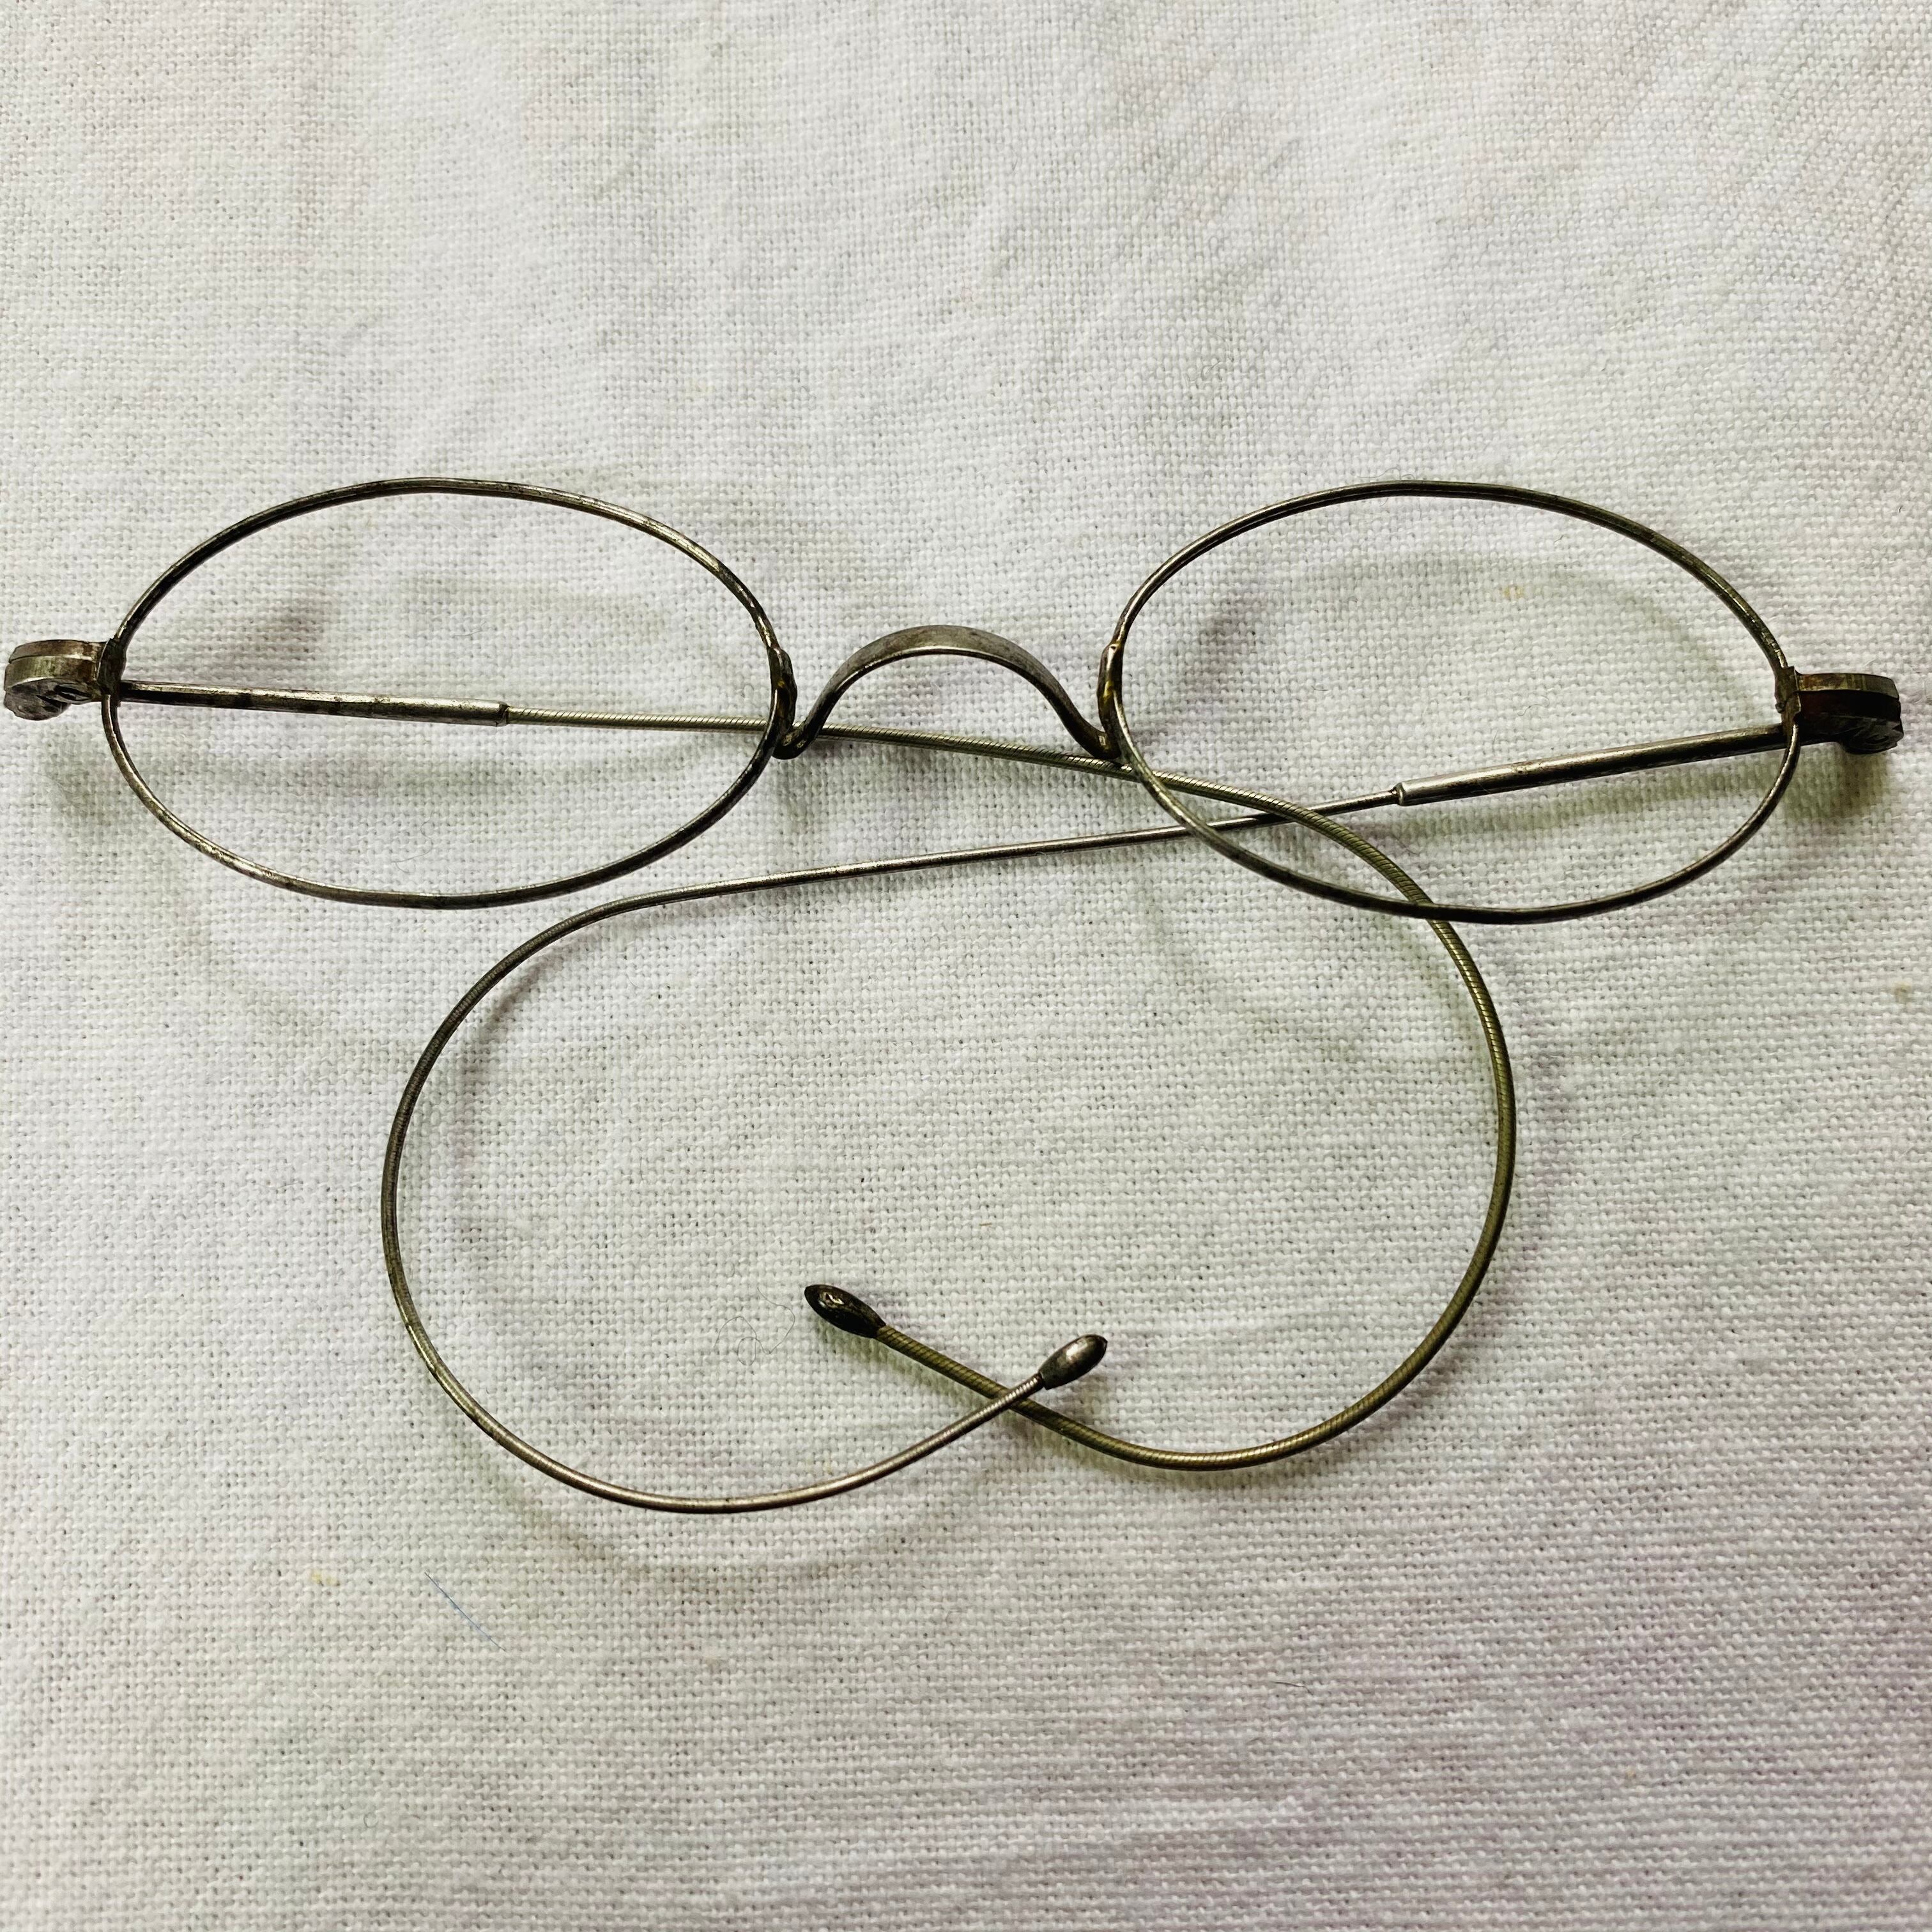 30s vintage Reading glasses USA製 ヴィンテージ メガネ シルバー 